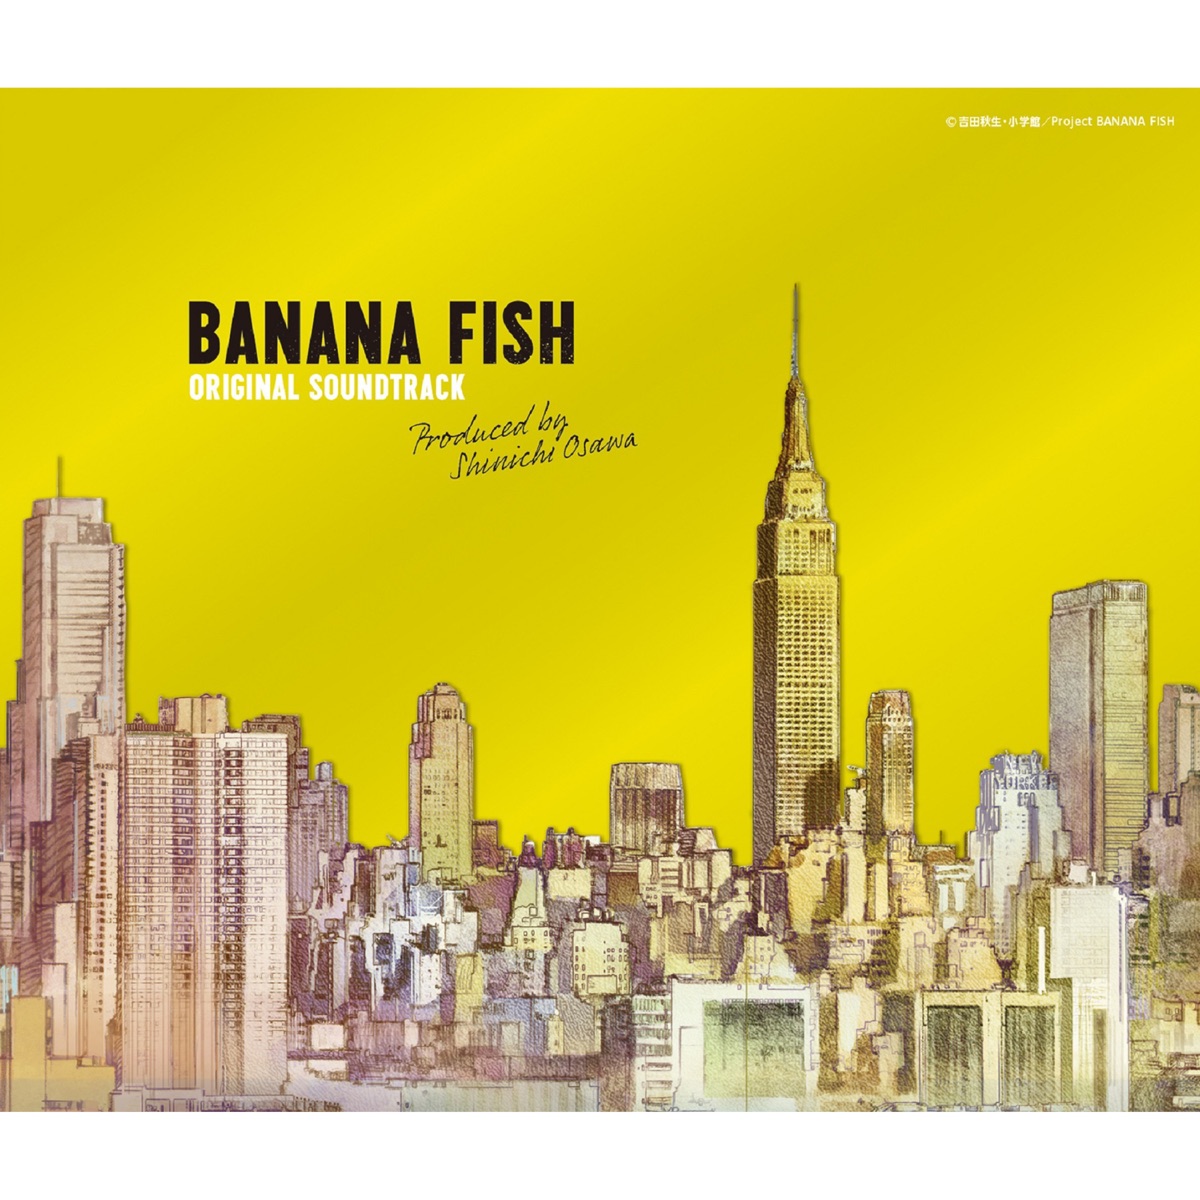 Banana Fish (Original Soundtrack) - Album by Banana Fish - Apple Music